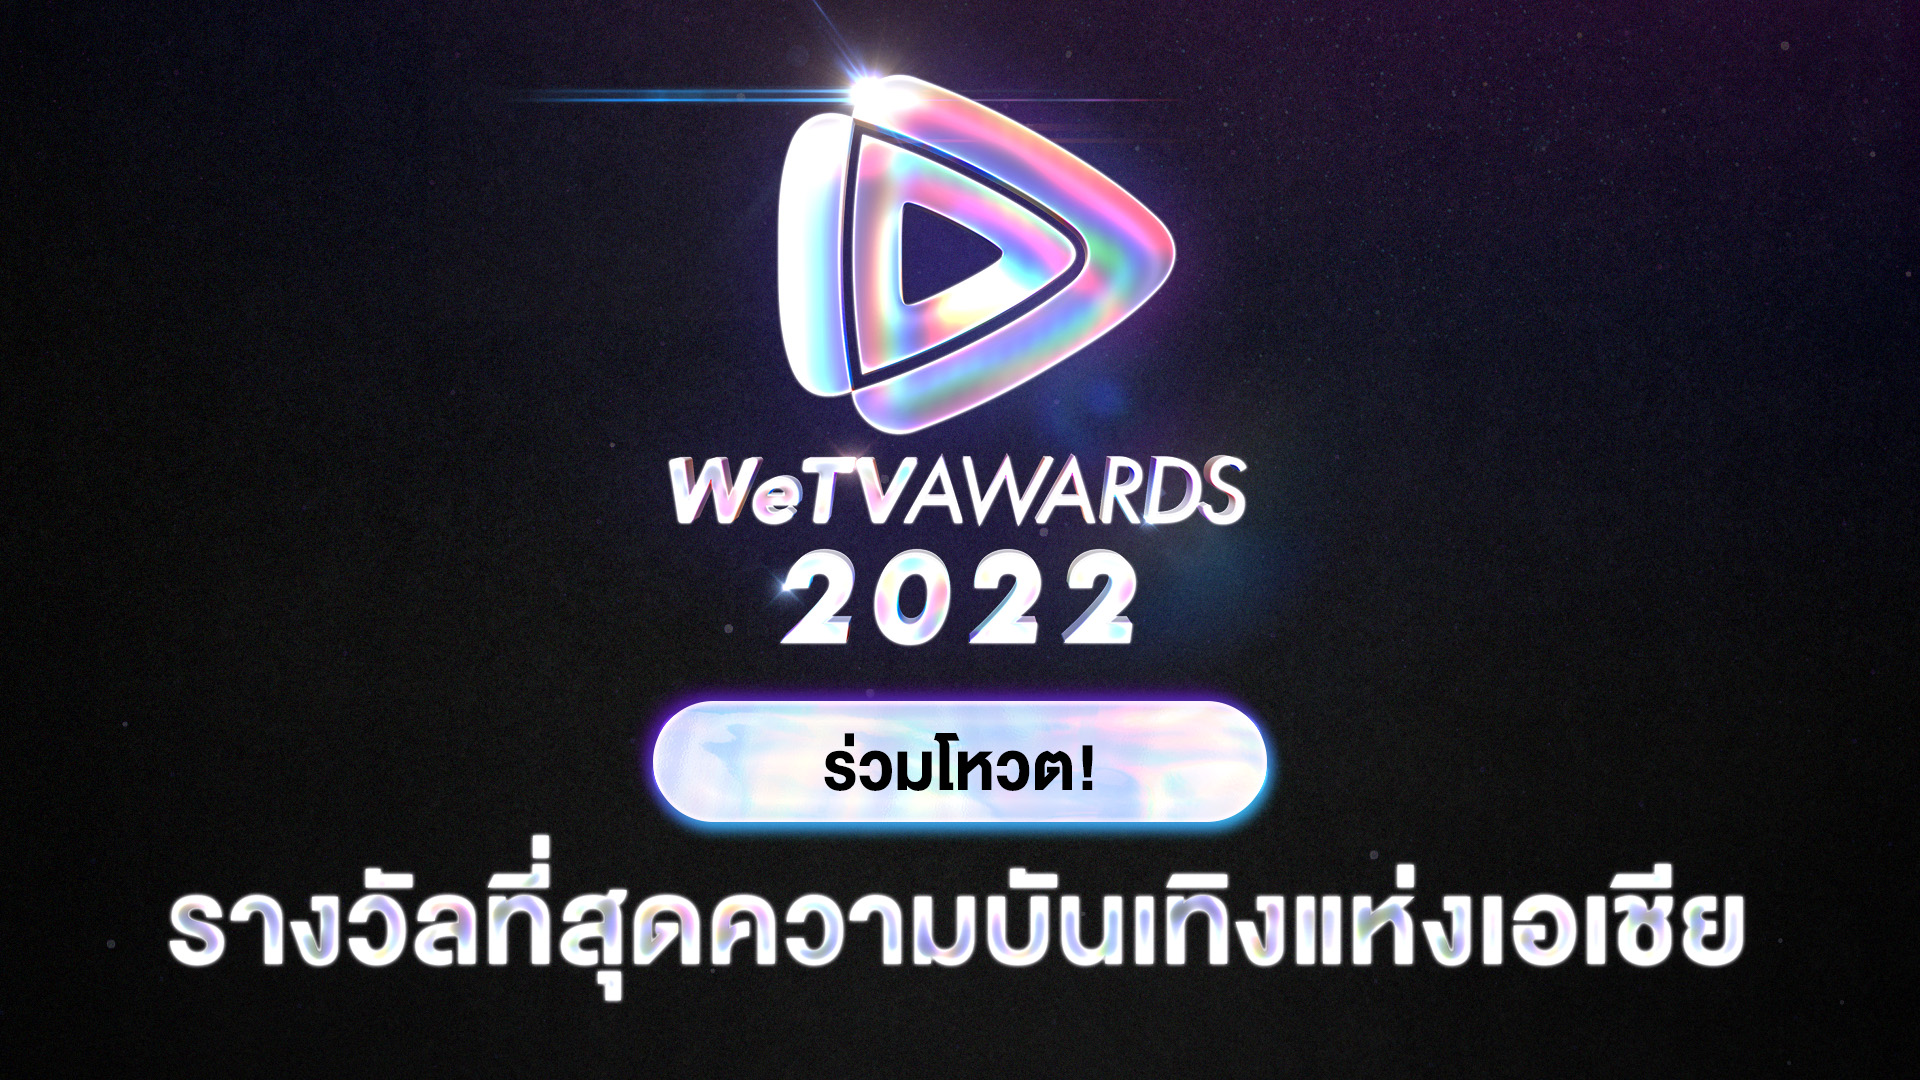 WeTV AWARDS 2022 - WeTV Awards 2022 Cover Photo - ภาพที่ 1